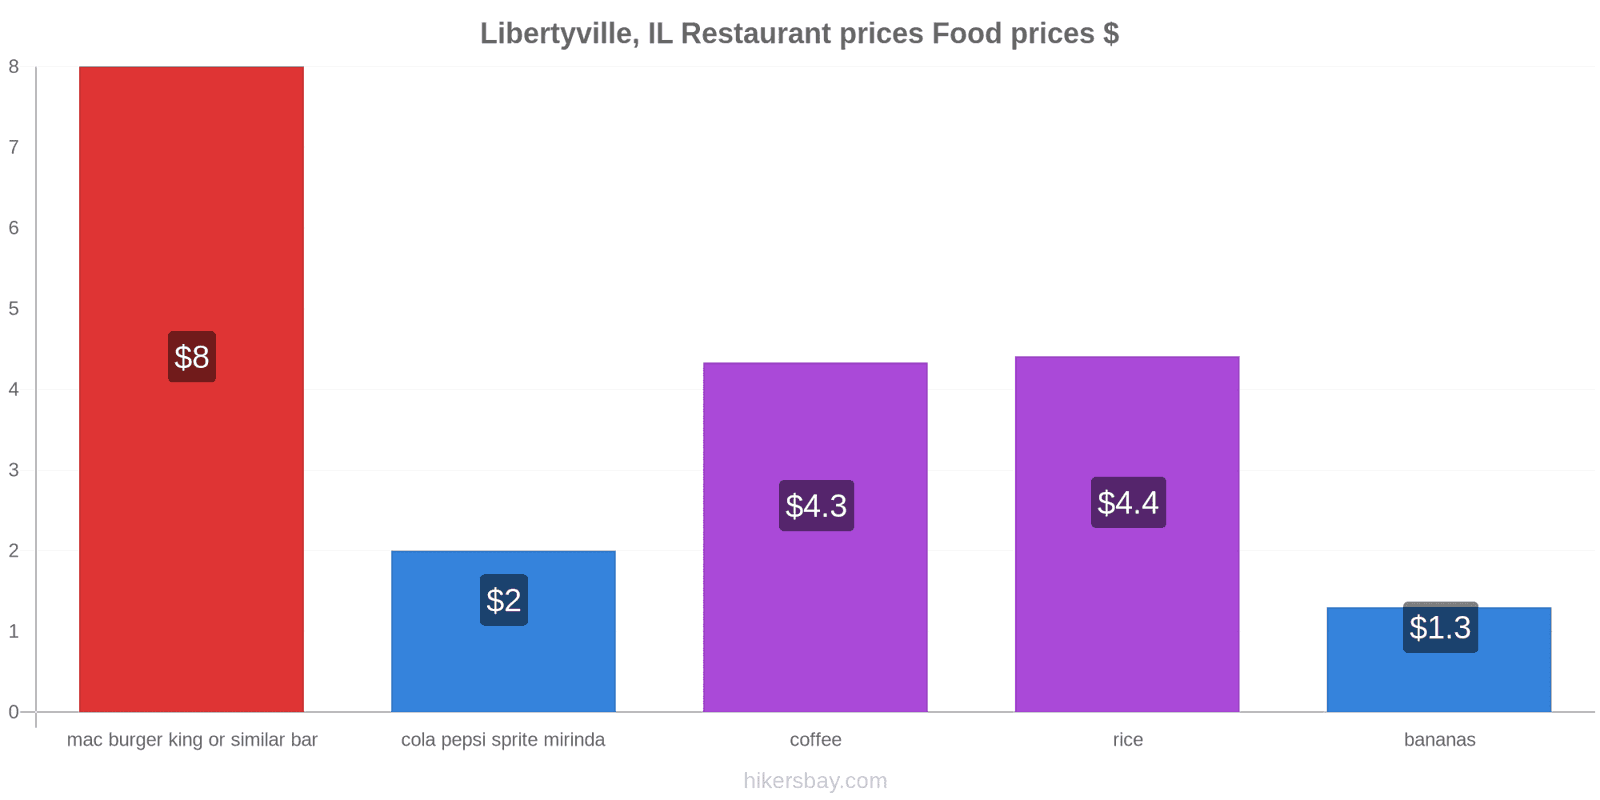 Libertyville, IL price changes hikersbay.com